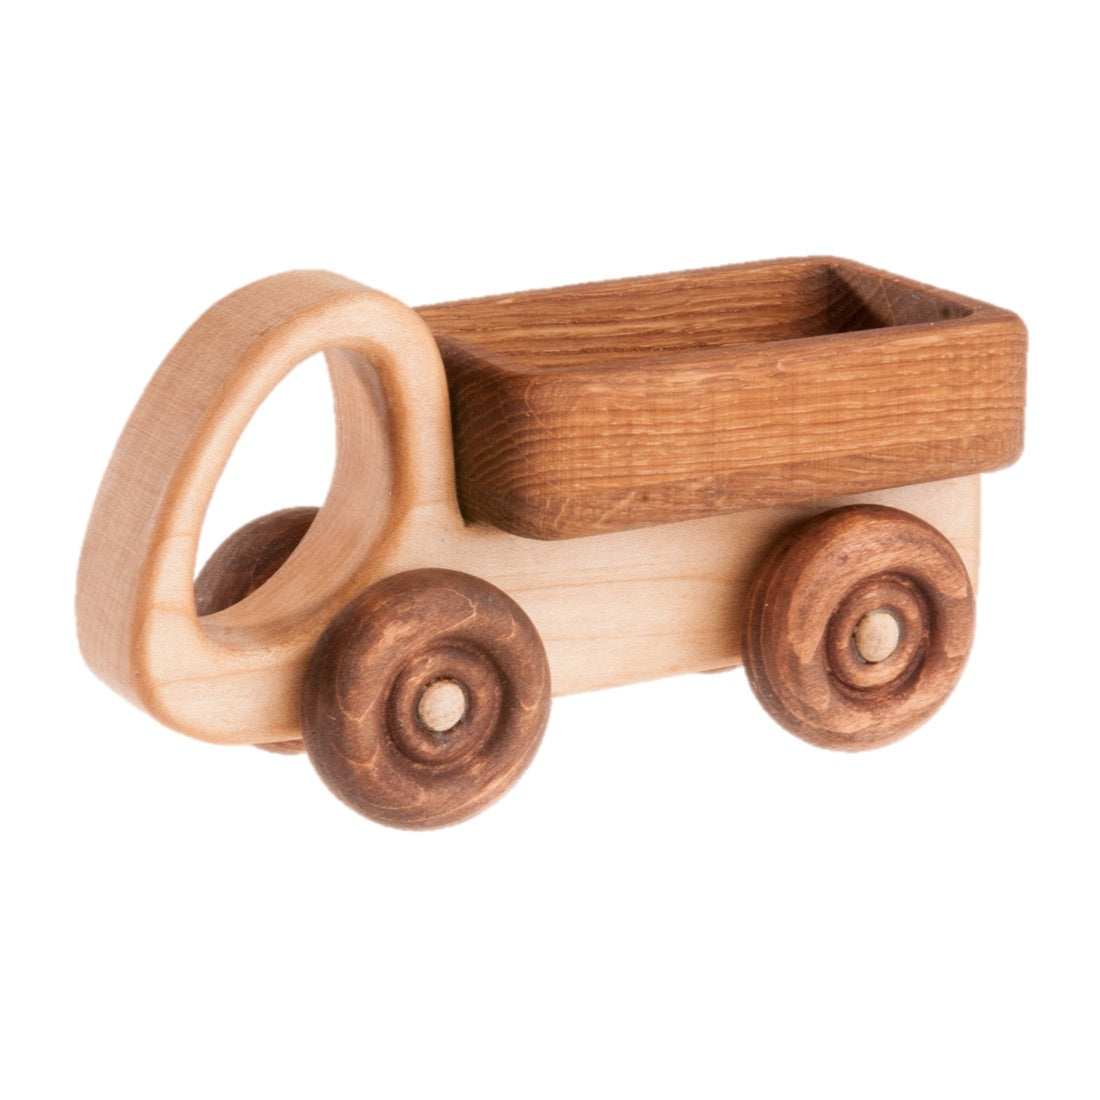 Wooden toy truck